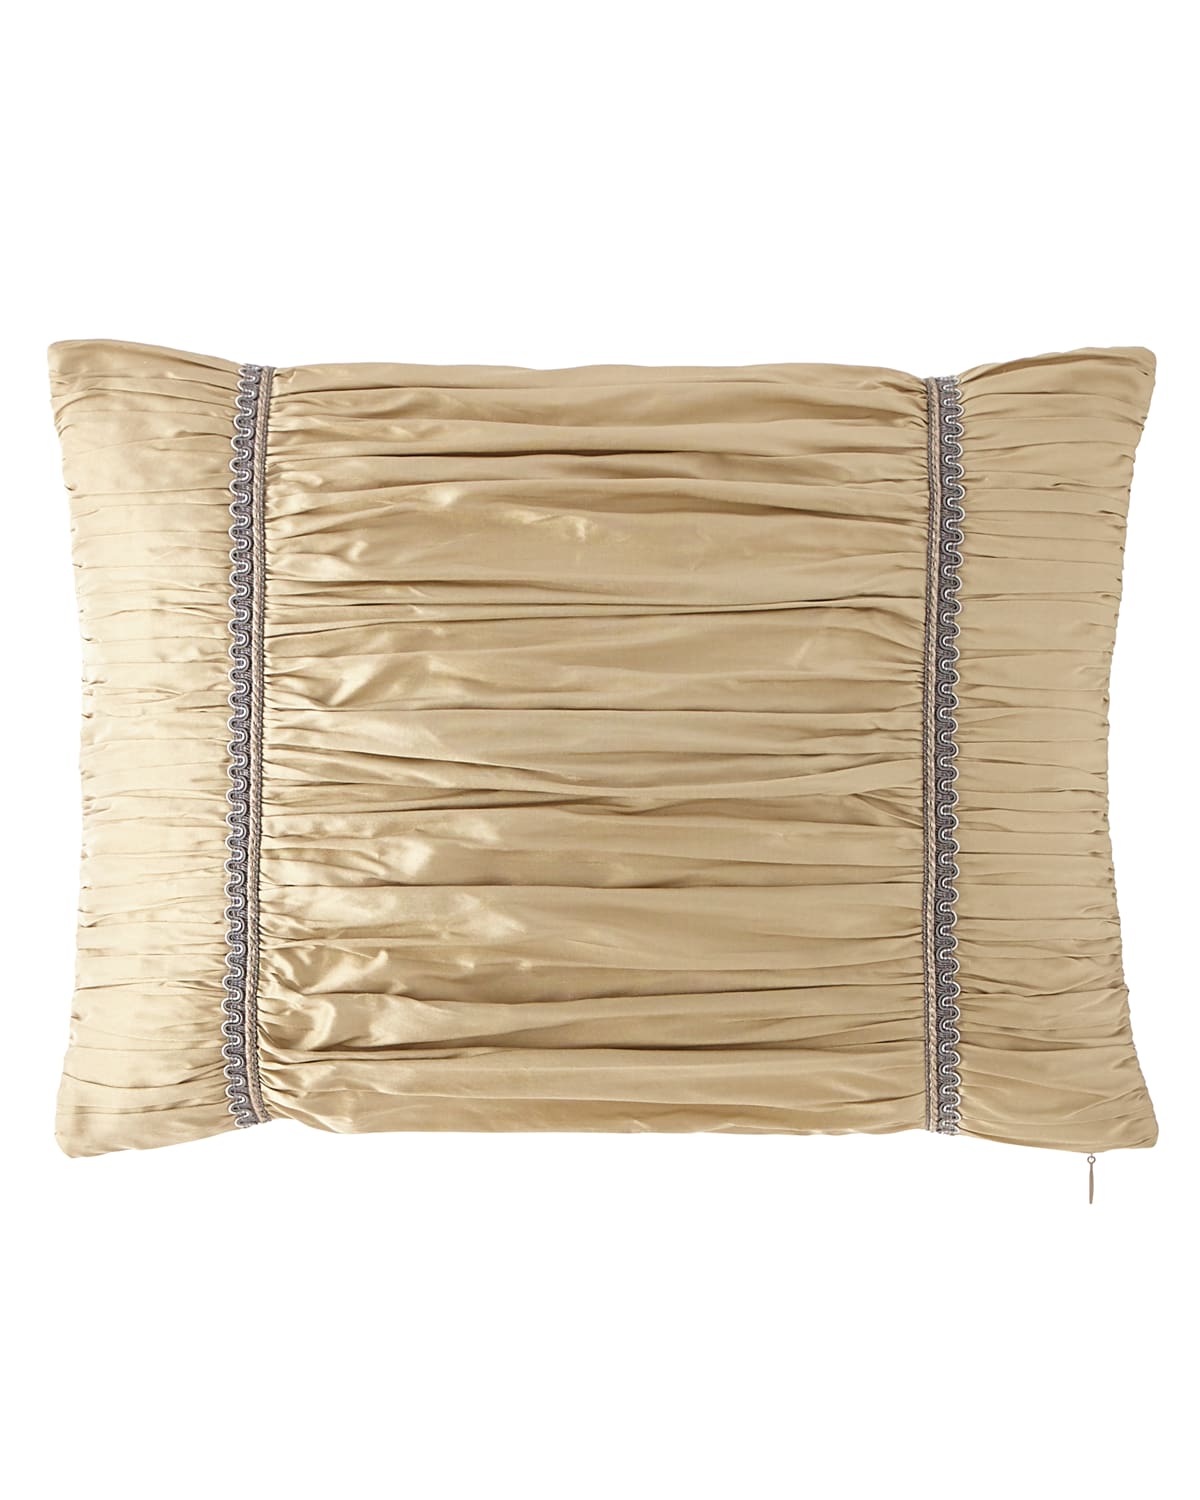 Image Austin Horn Collection Sophia Boudoir Pillow, 12" x 16"